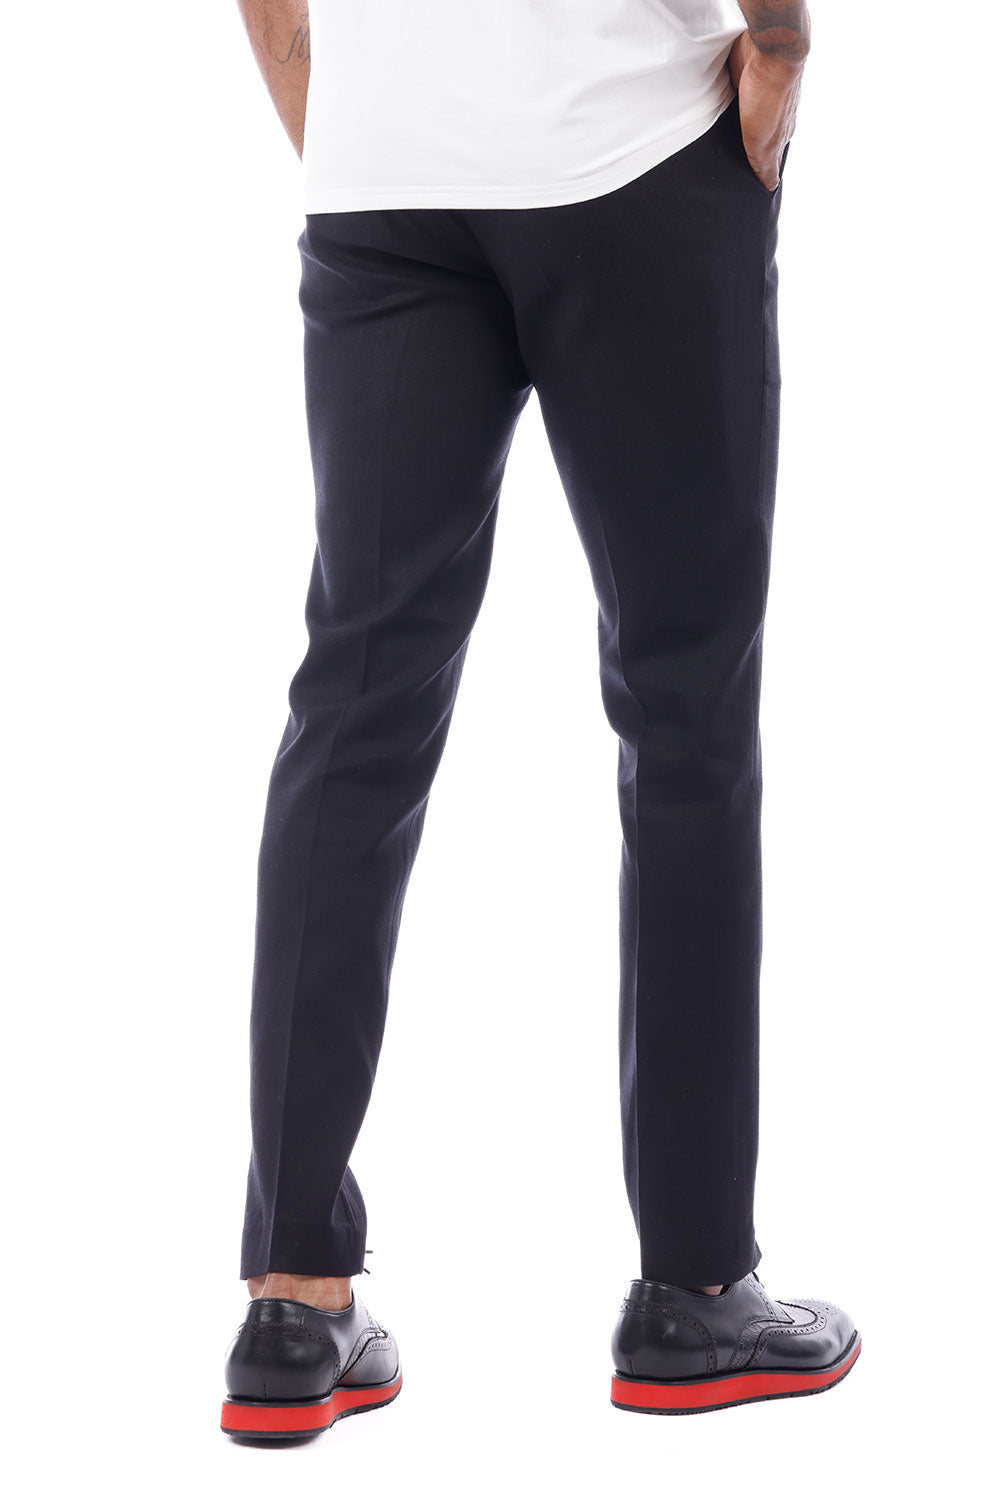 Barabas Men's Adjustable Waistband Drawstring Linen Pants 4CP30 Black